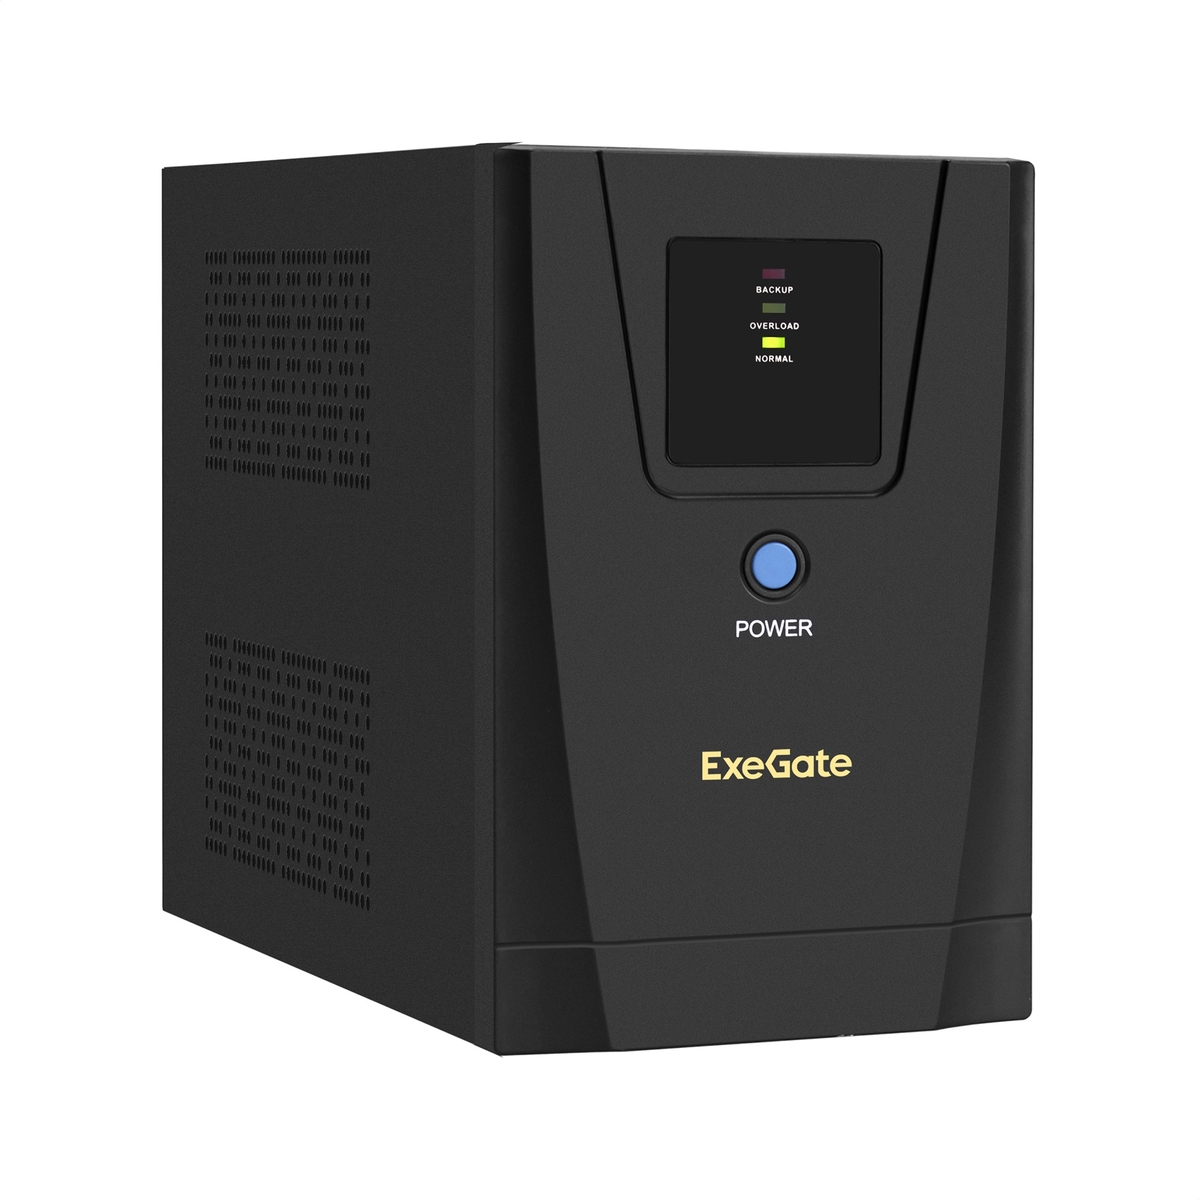  ExeGate SpecialPro UNB-1500.LED.AVR.2SH.3C13.USB